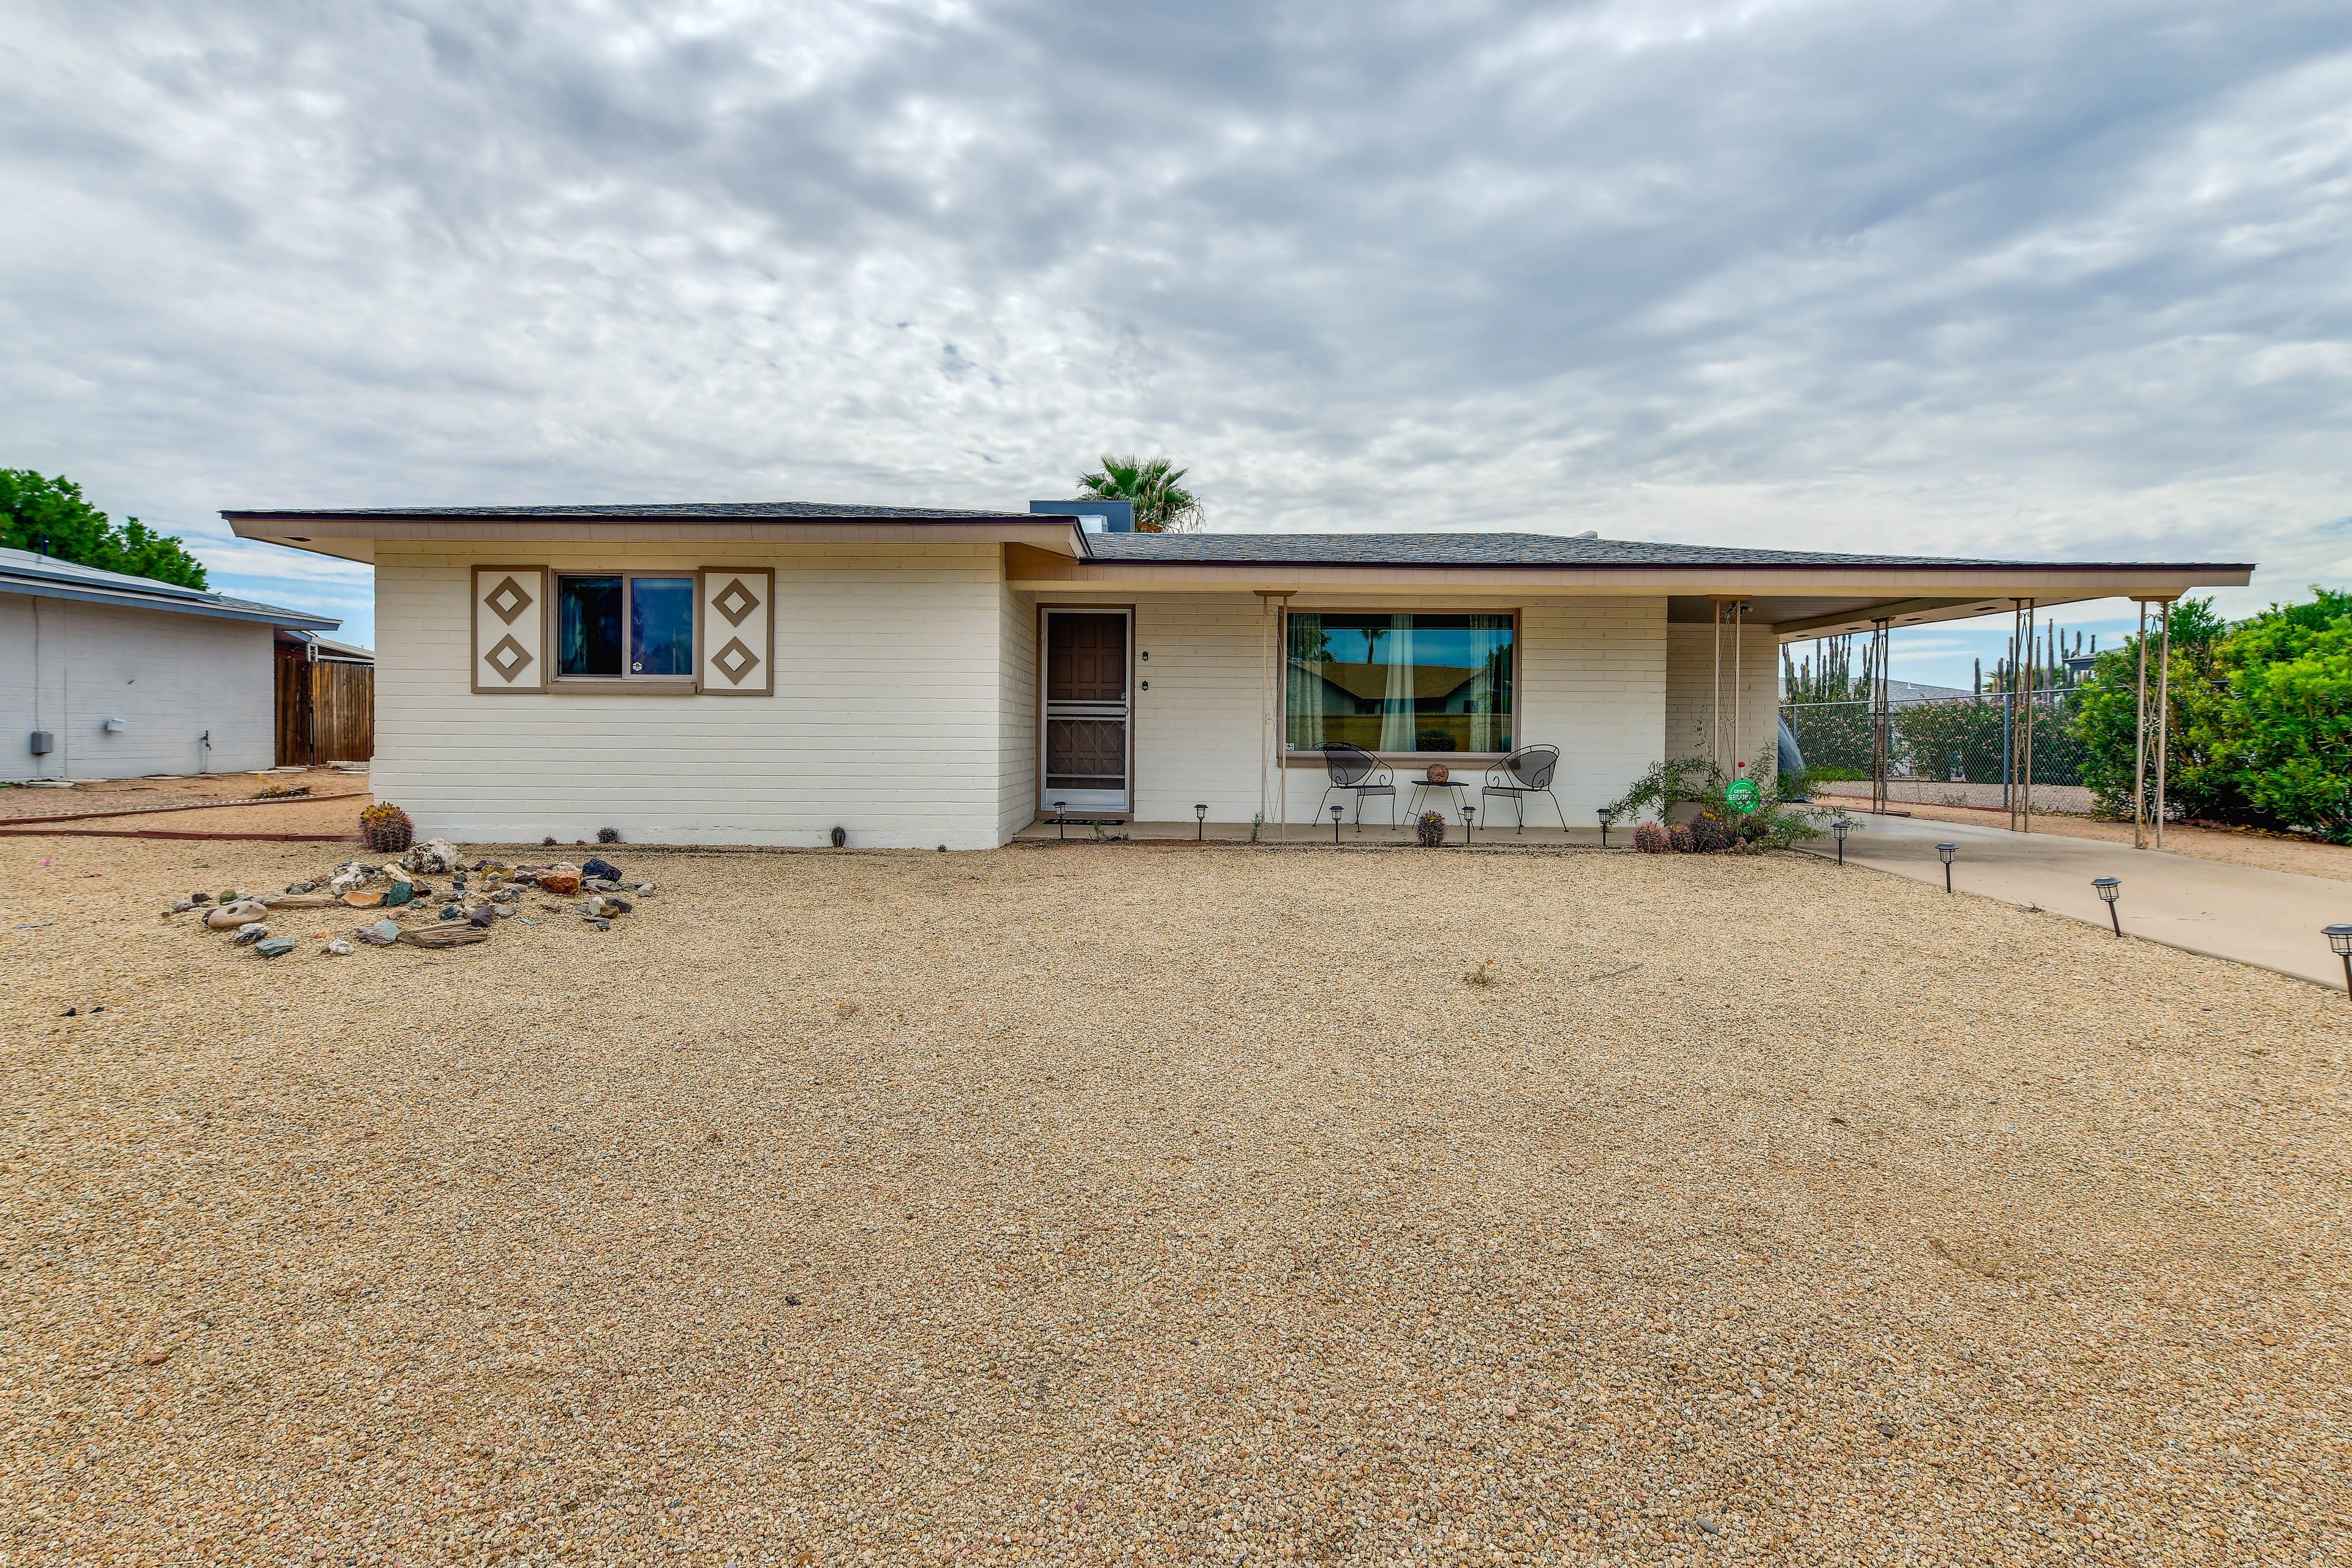 Desert Dreamin: Stylish Mesa Home, 55 + Community! - Houses for Rent in  Mesa, Arizona, United States - Airbnb